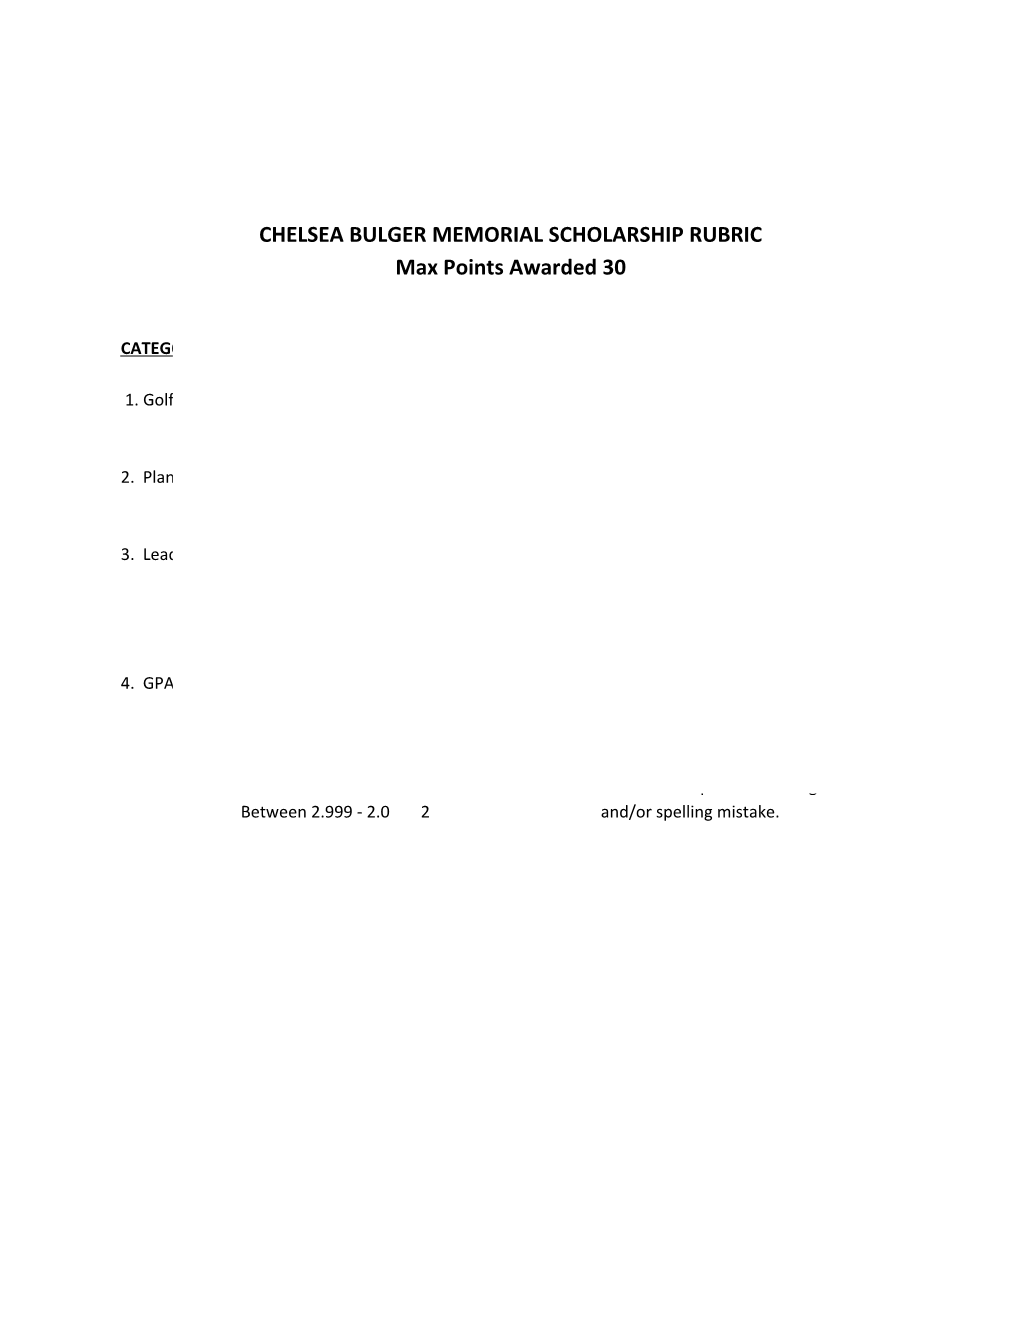 Chelsea Bulger Memorial Scholarship